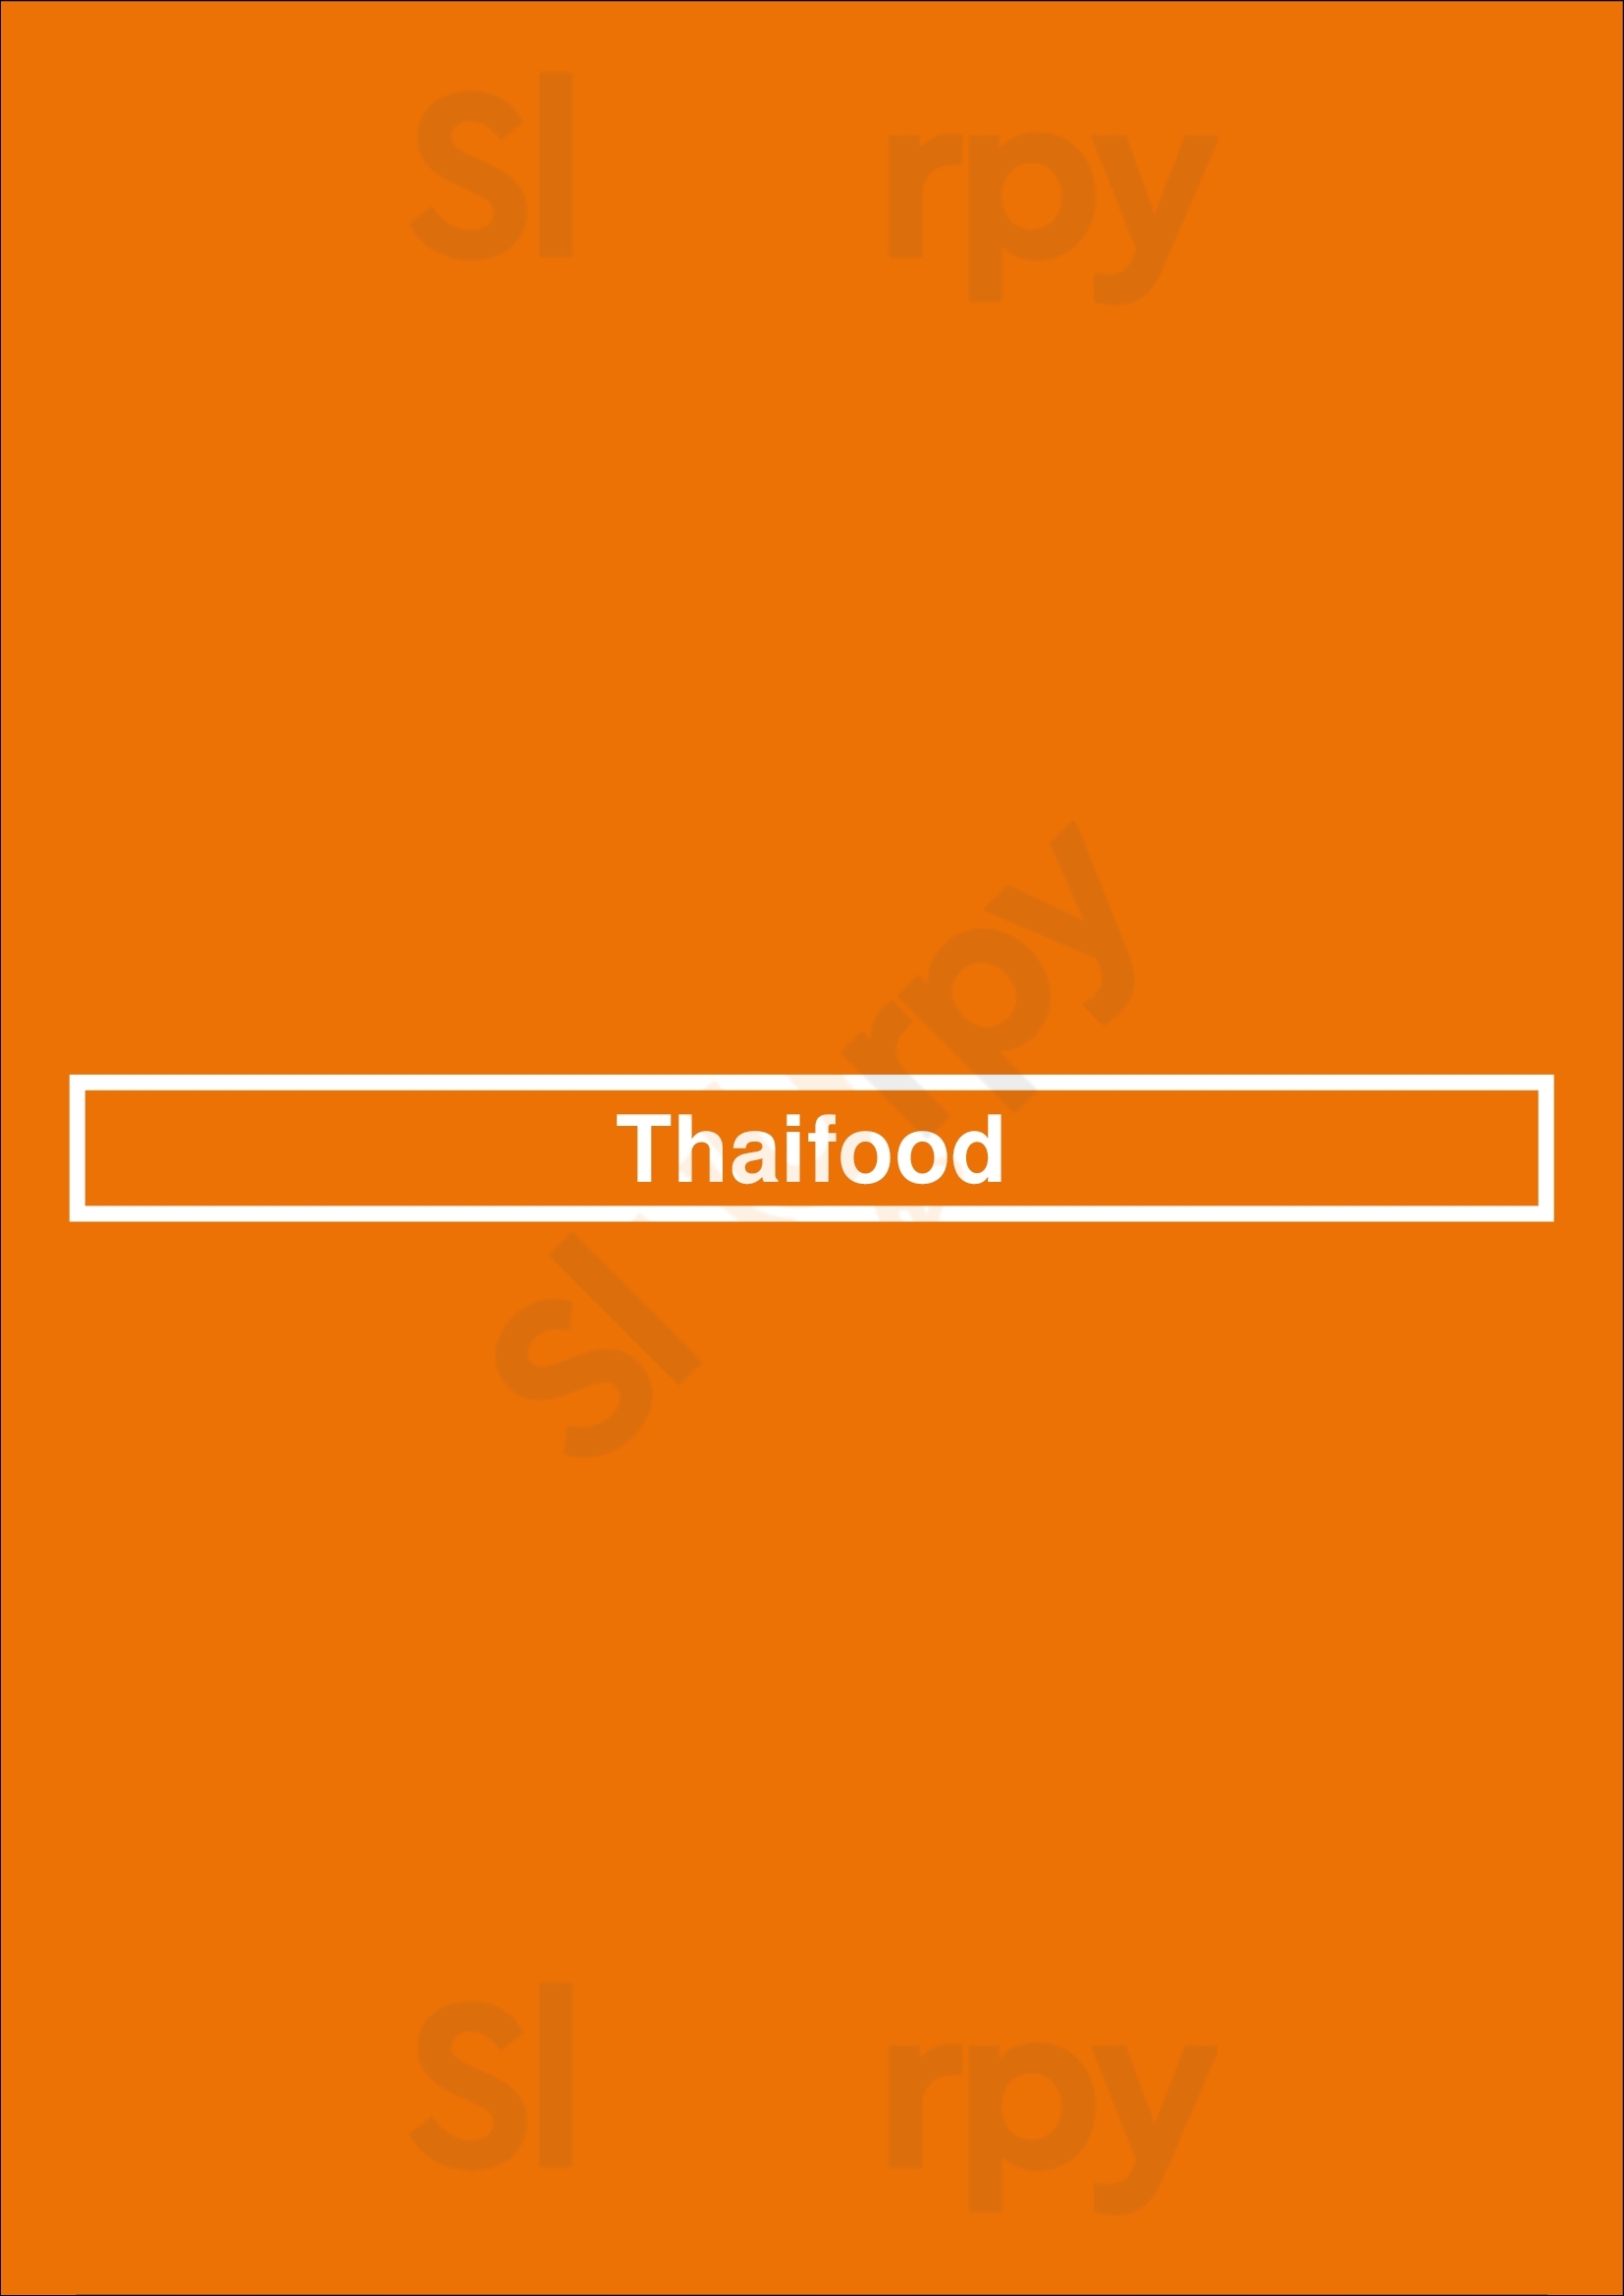 Thaifood Amersfoort Menu - 1